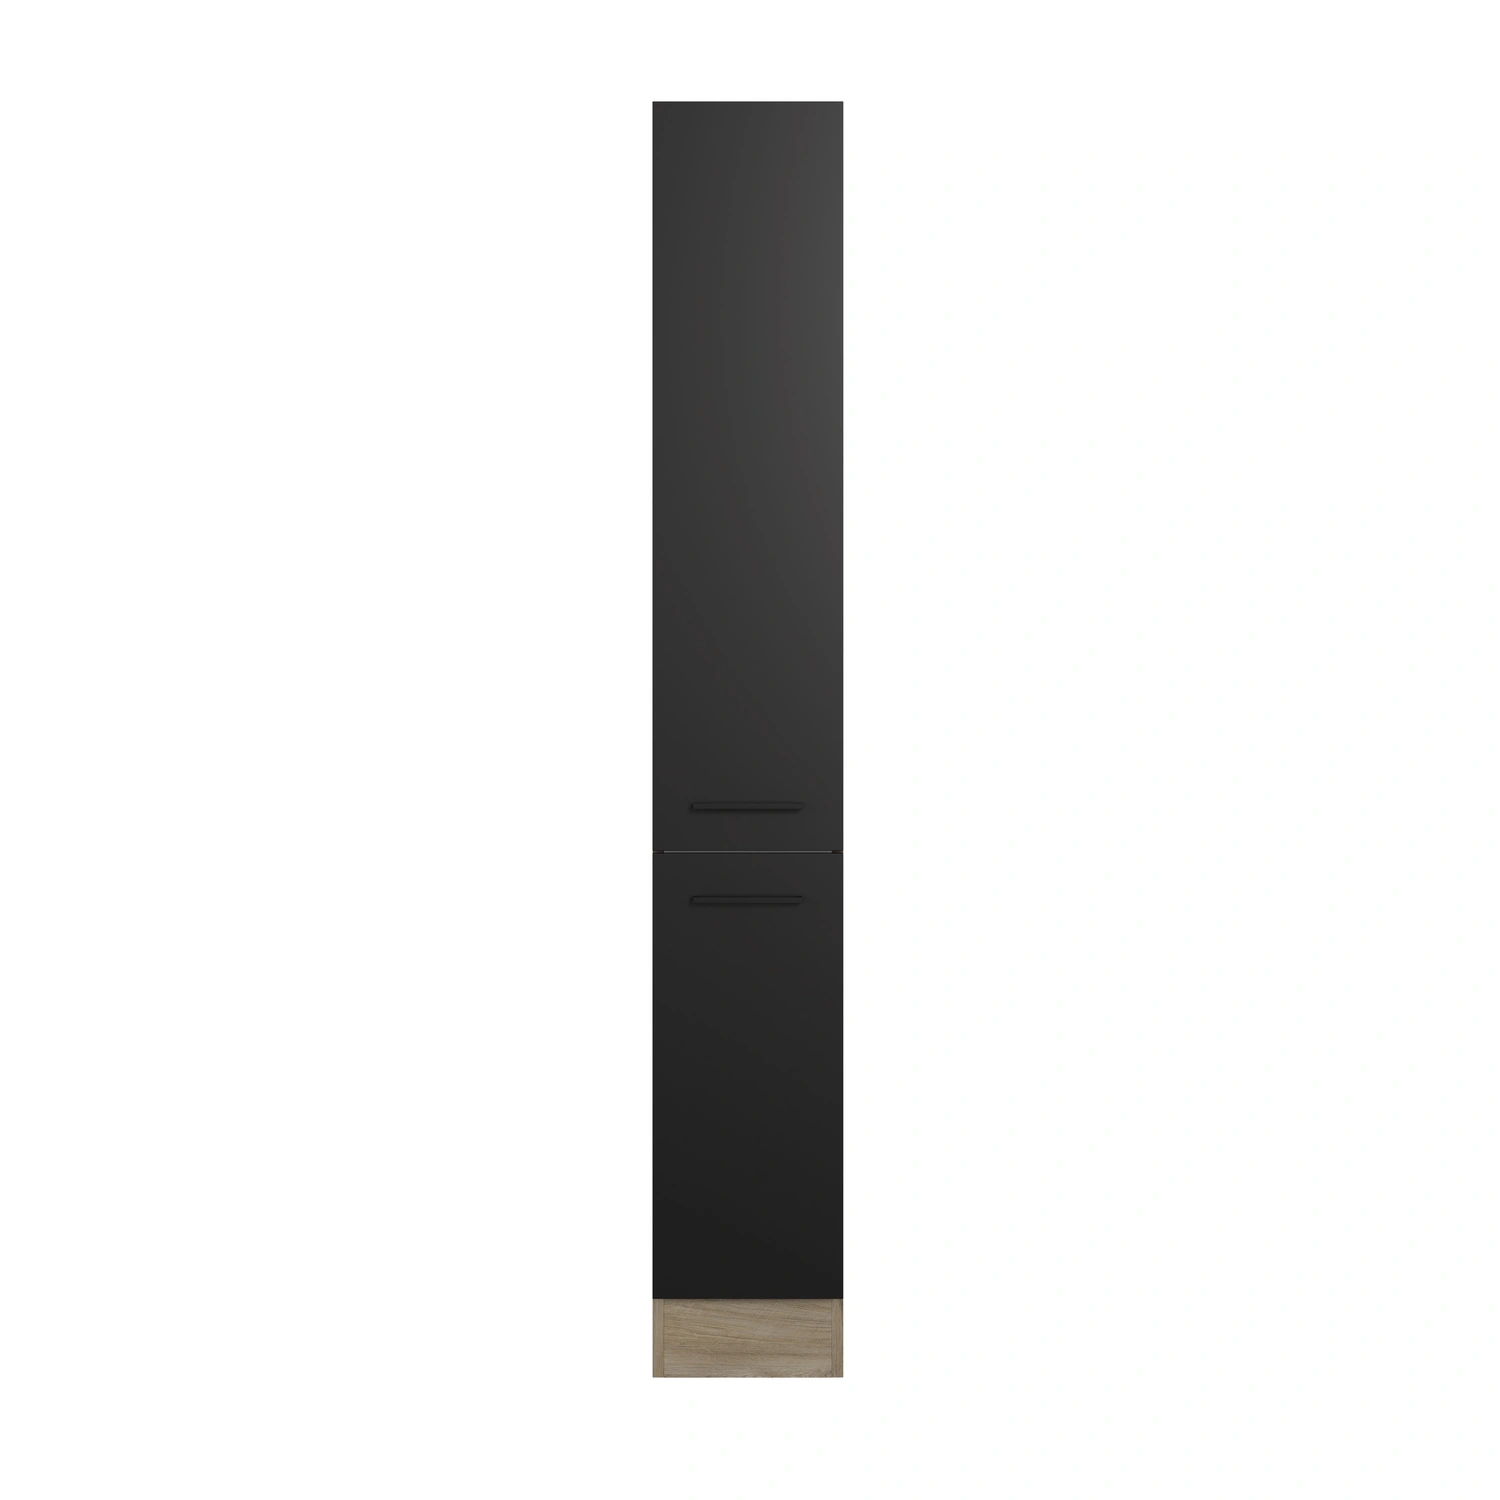 Breite: »Capri«, Flex-Well 30 schwarz cm, Apothekerschrank